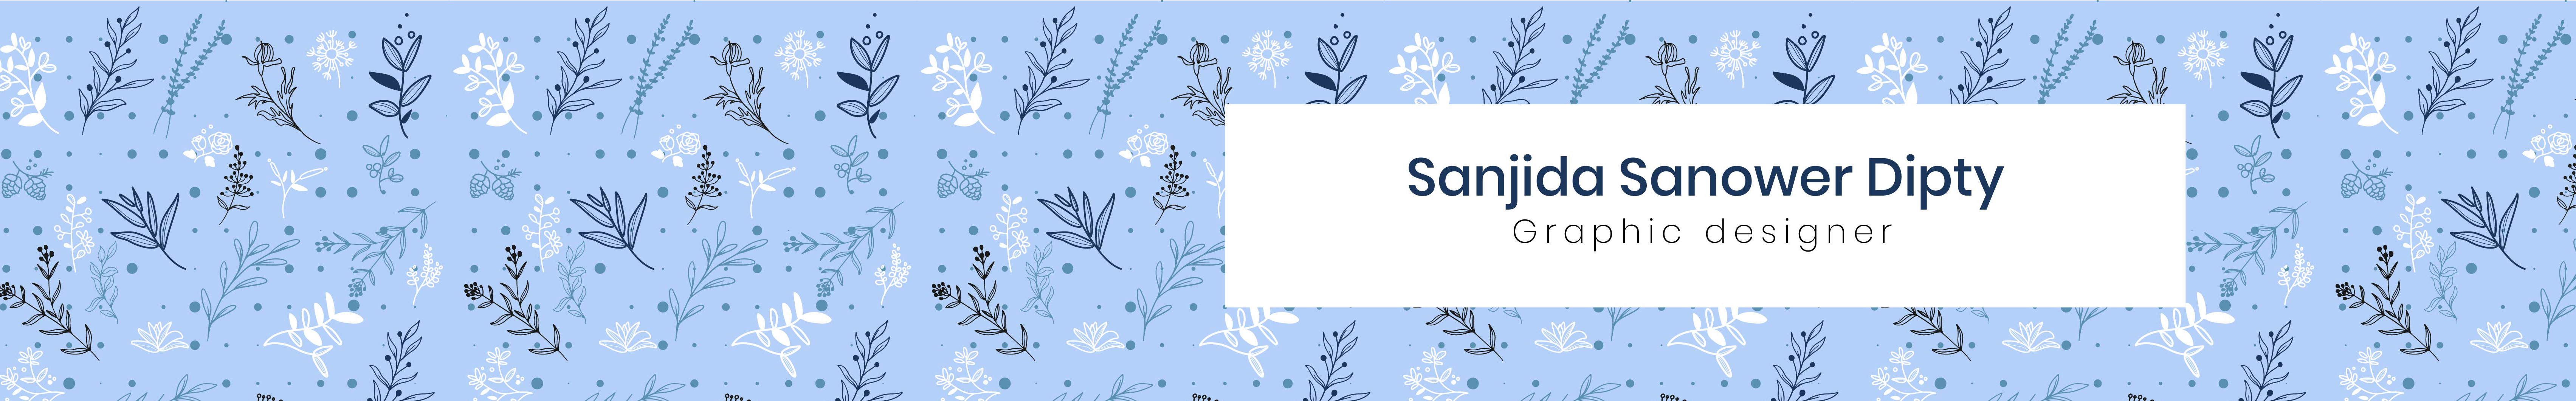 Sanjida Sanower Dipty's profile banner